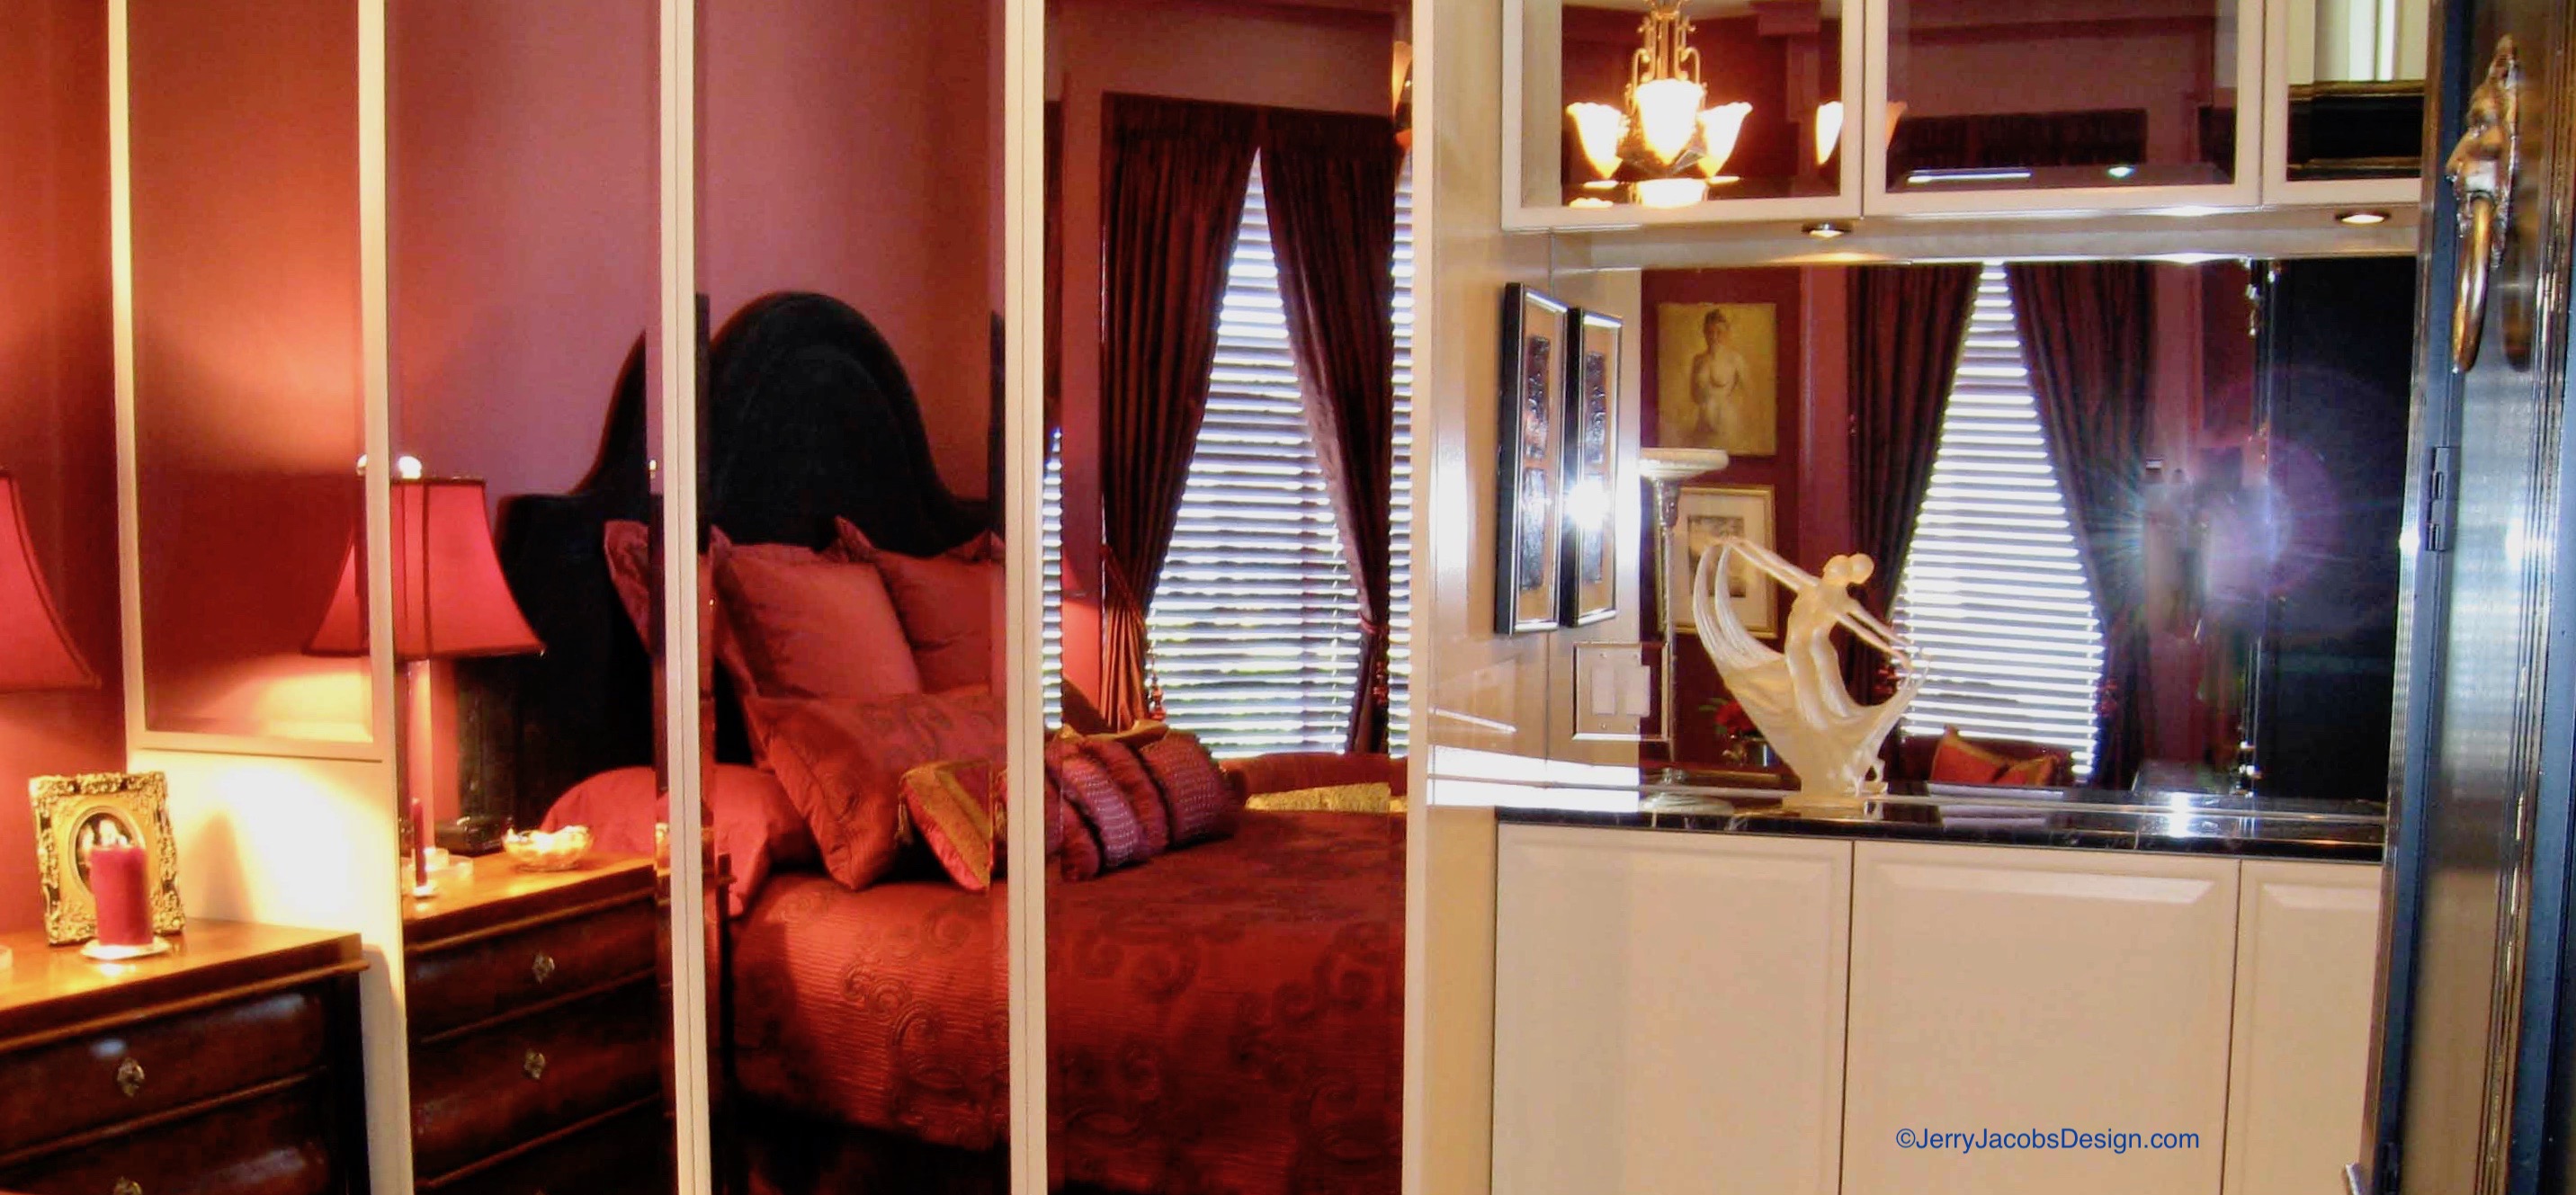 Penthouse Apartment Interior DesignJerry Jacobs Design Mirrored bedroom